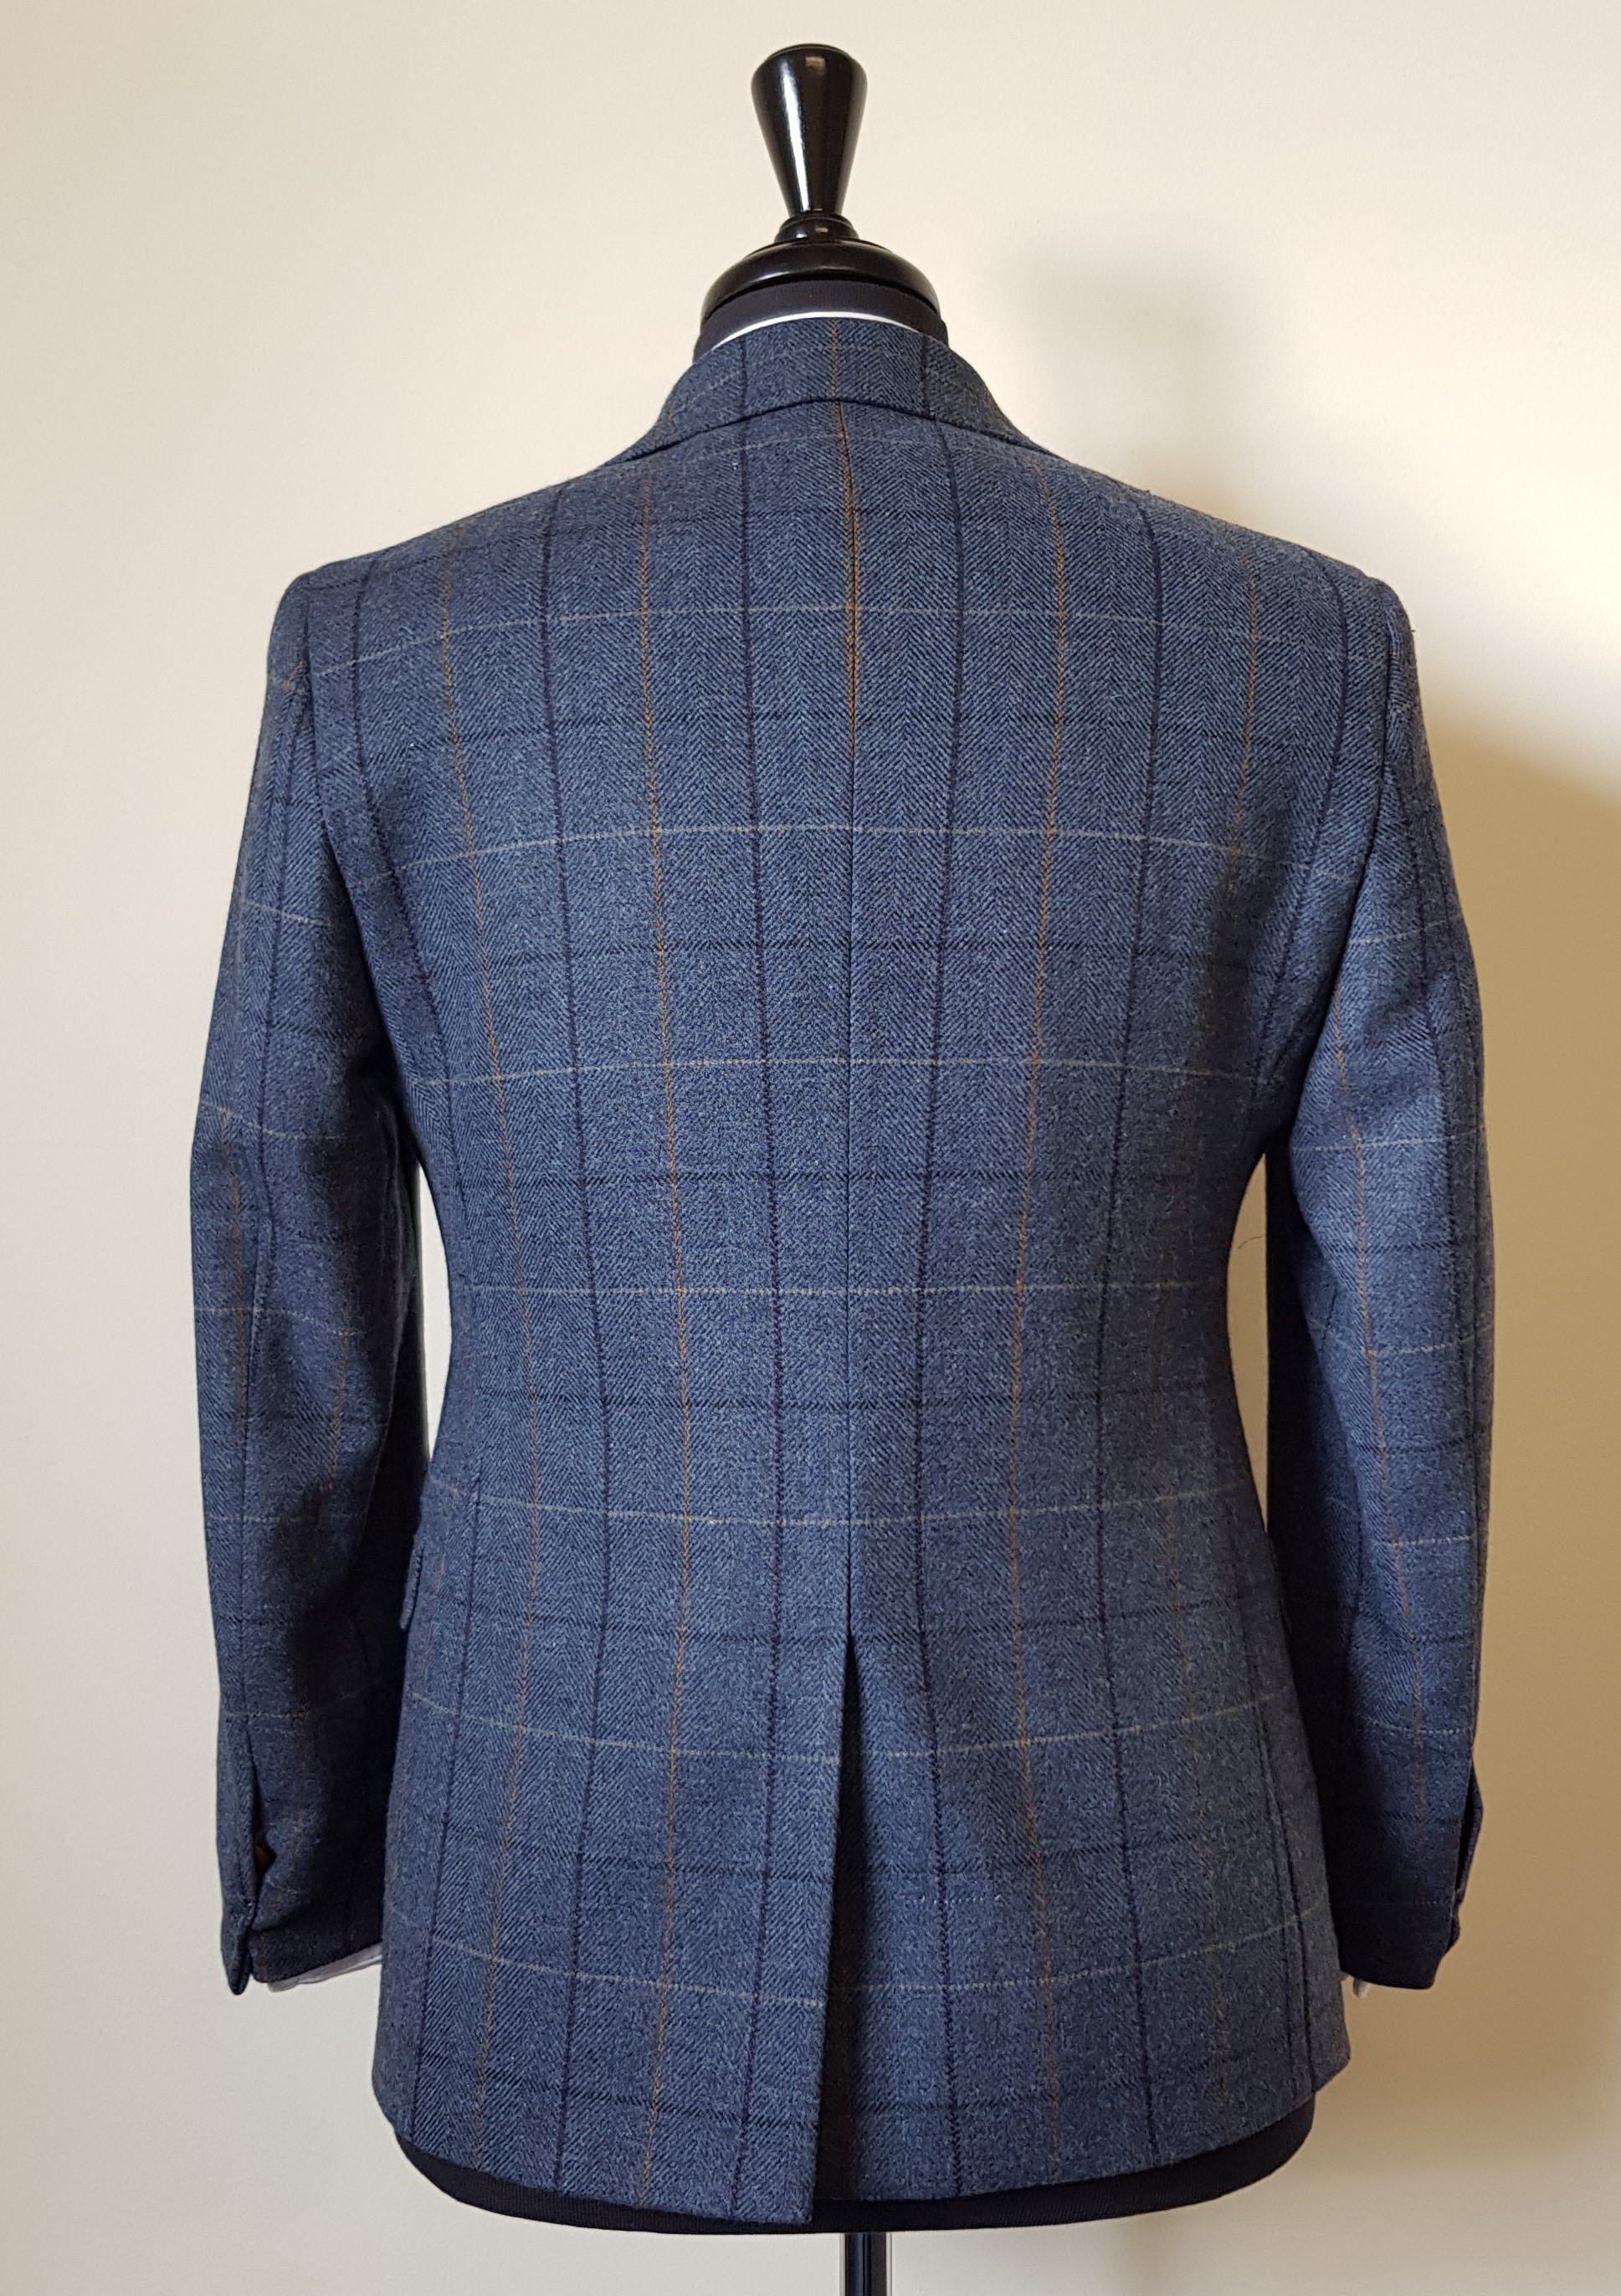 3 Piece Tweed Suit in Blue Herringbone with Double Check — TWEED ADDICT